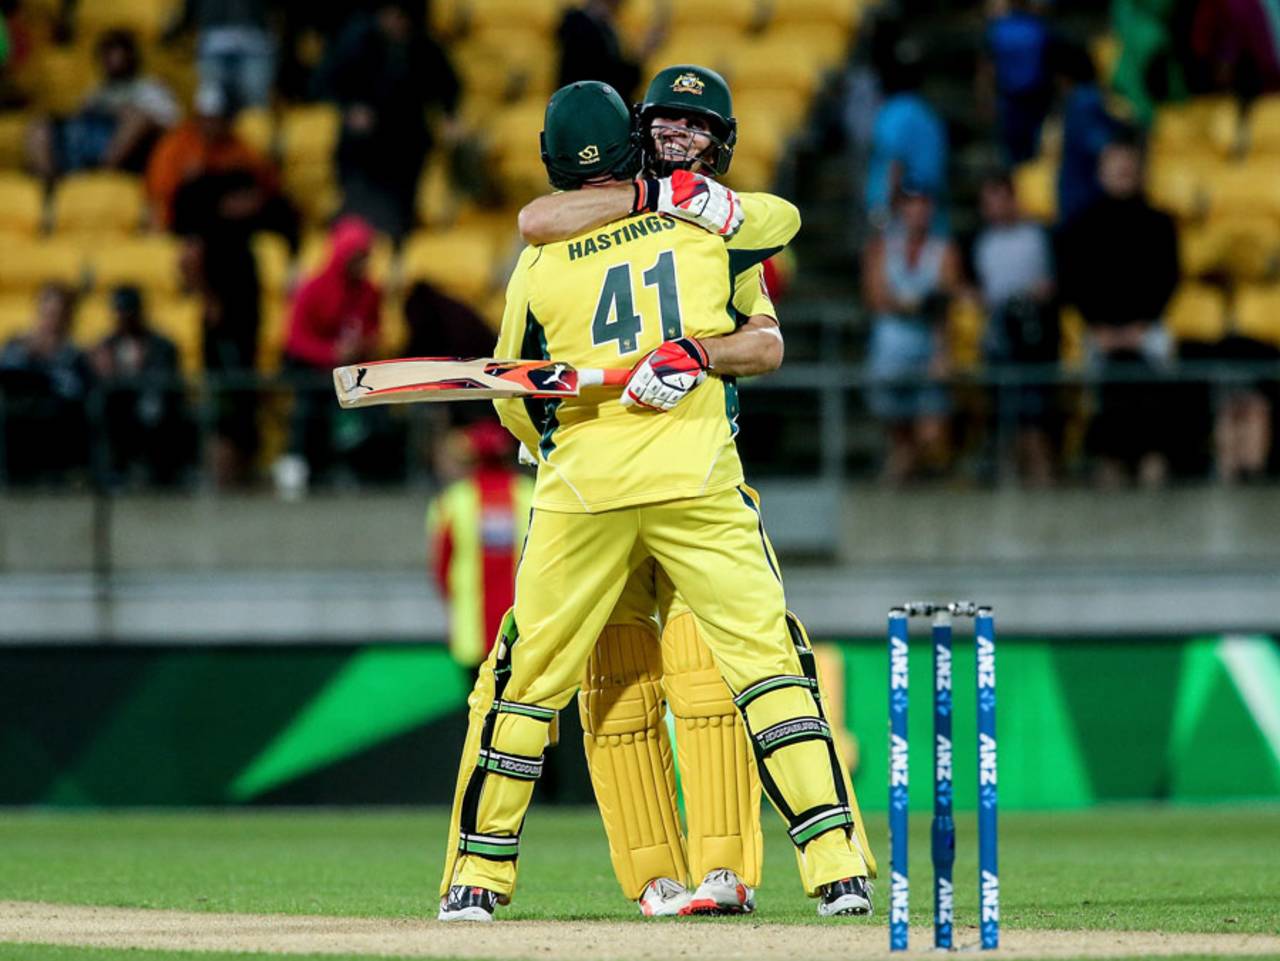 Mitchell Marsh and John Hastings embrace after Australia's win, New Zealand v Australia, 2nd ODI, Wellington, February 6, 2016